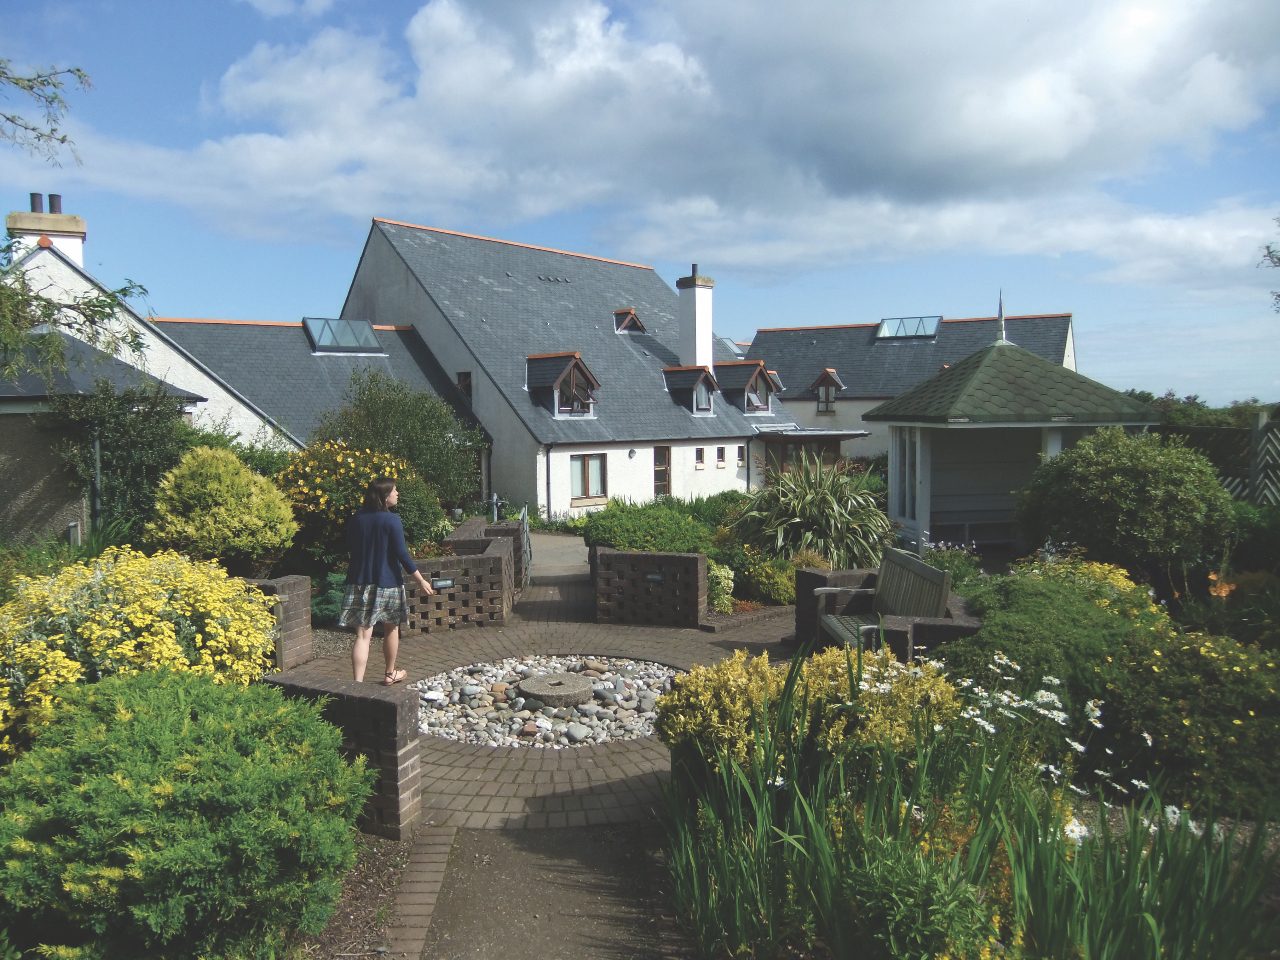 House and garden in Ireland